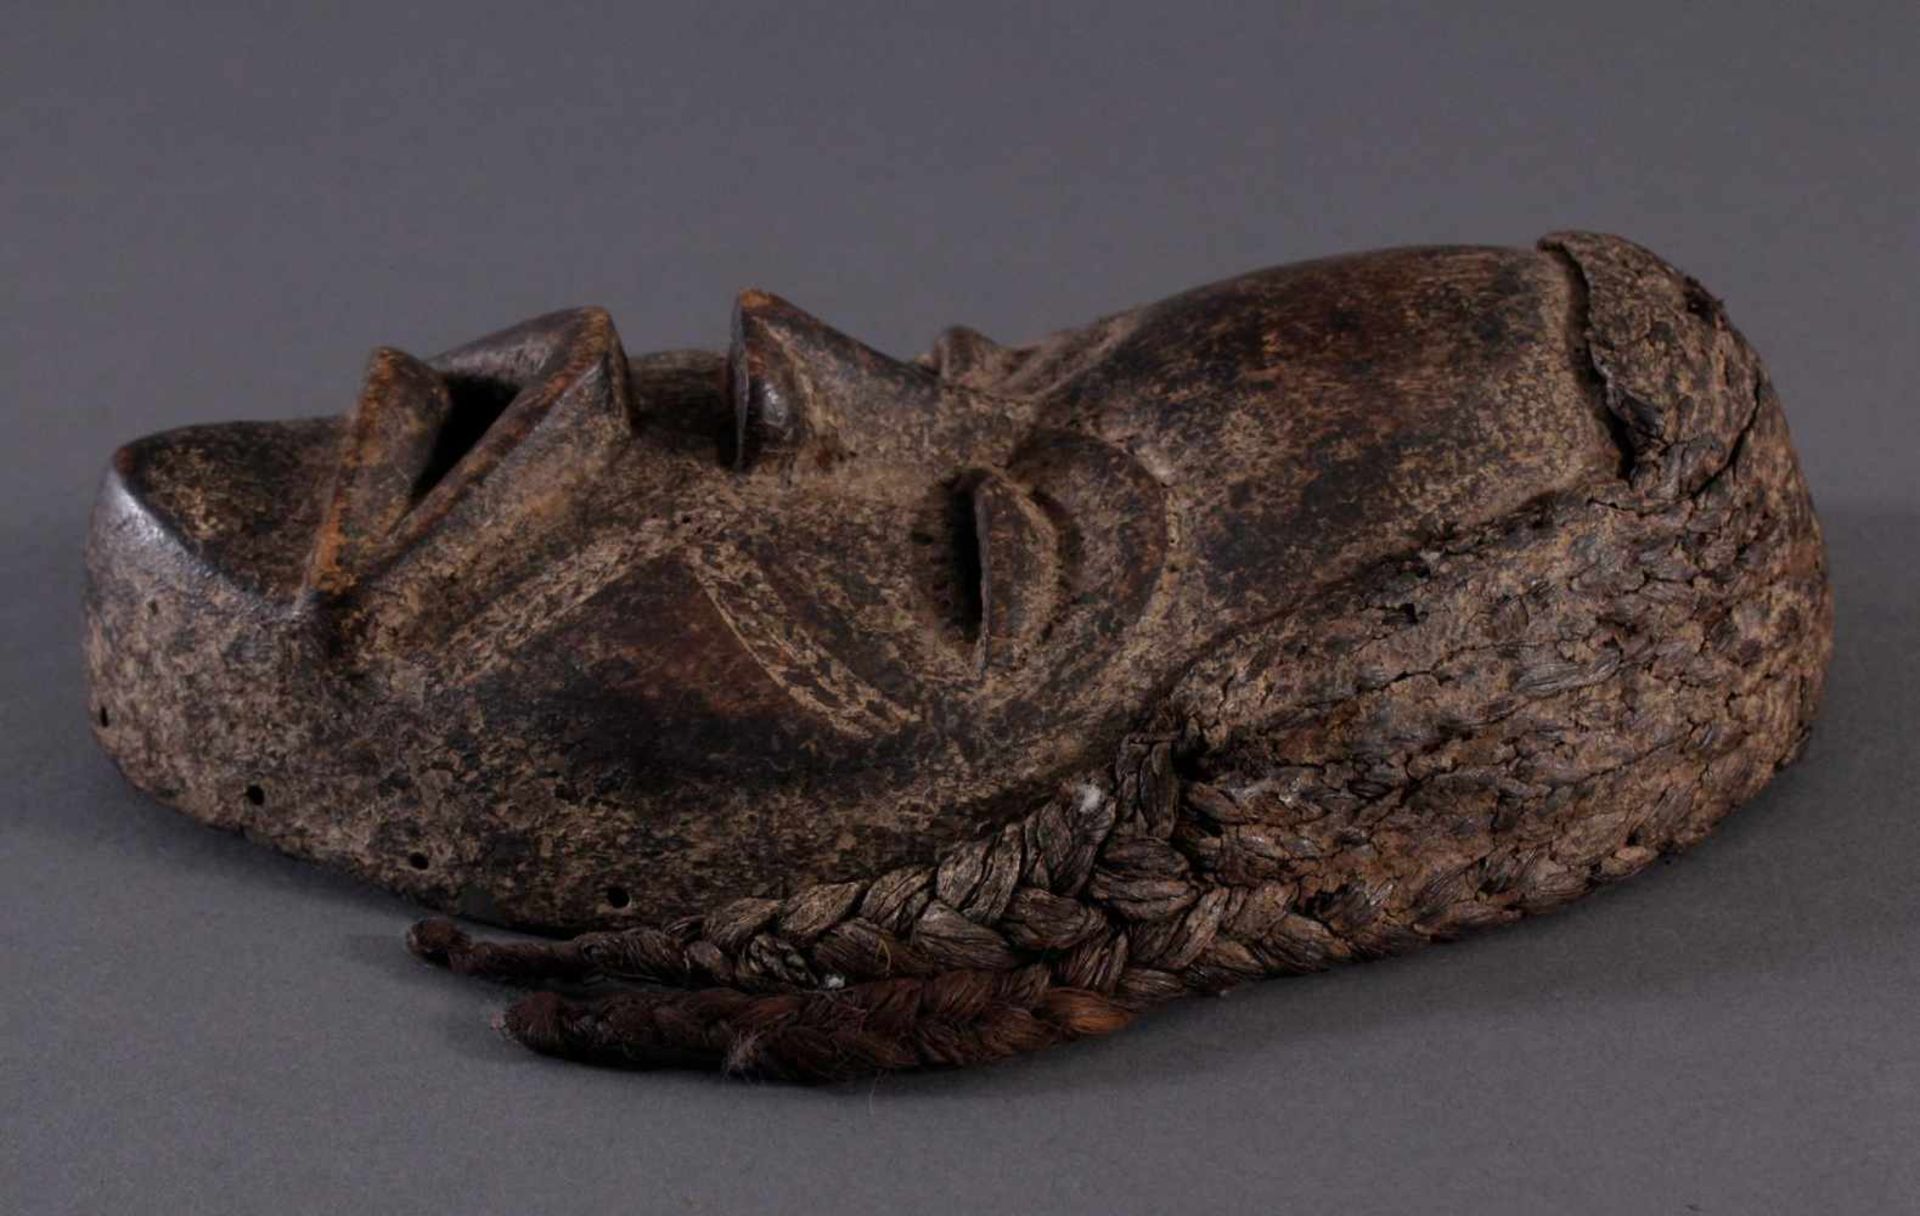 Antike Maske der Dan, LiberiaHolz, geschnitzt, dunkler Patina, Narbenschmuck, Haare aus geflochtenen - Image 3 of 4